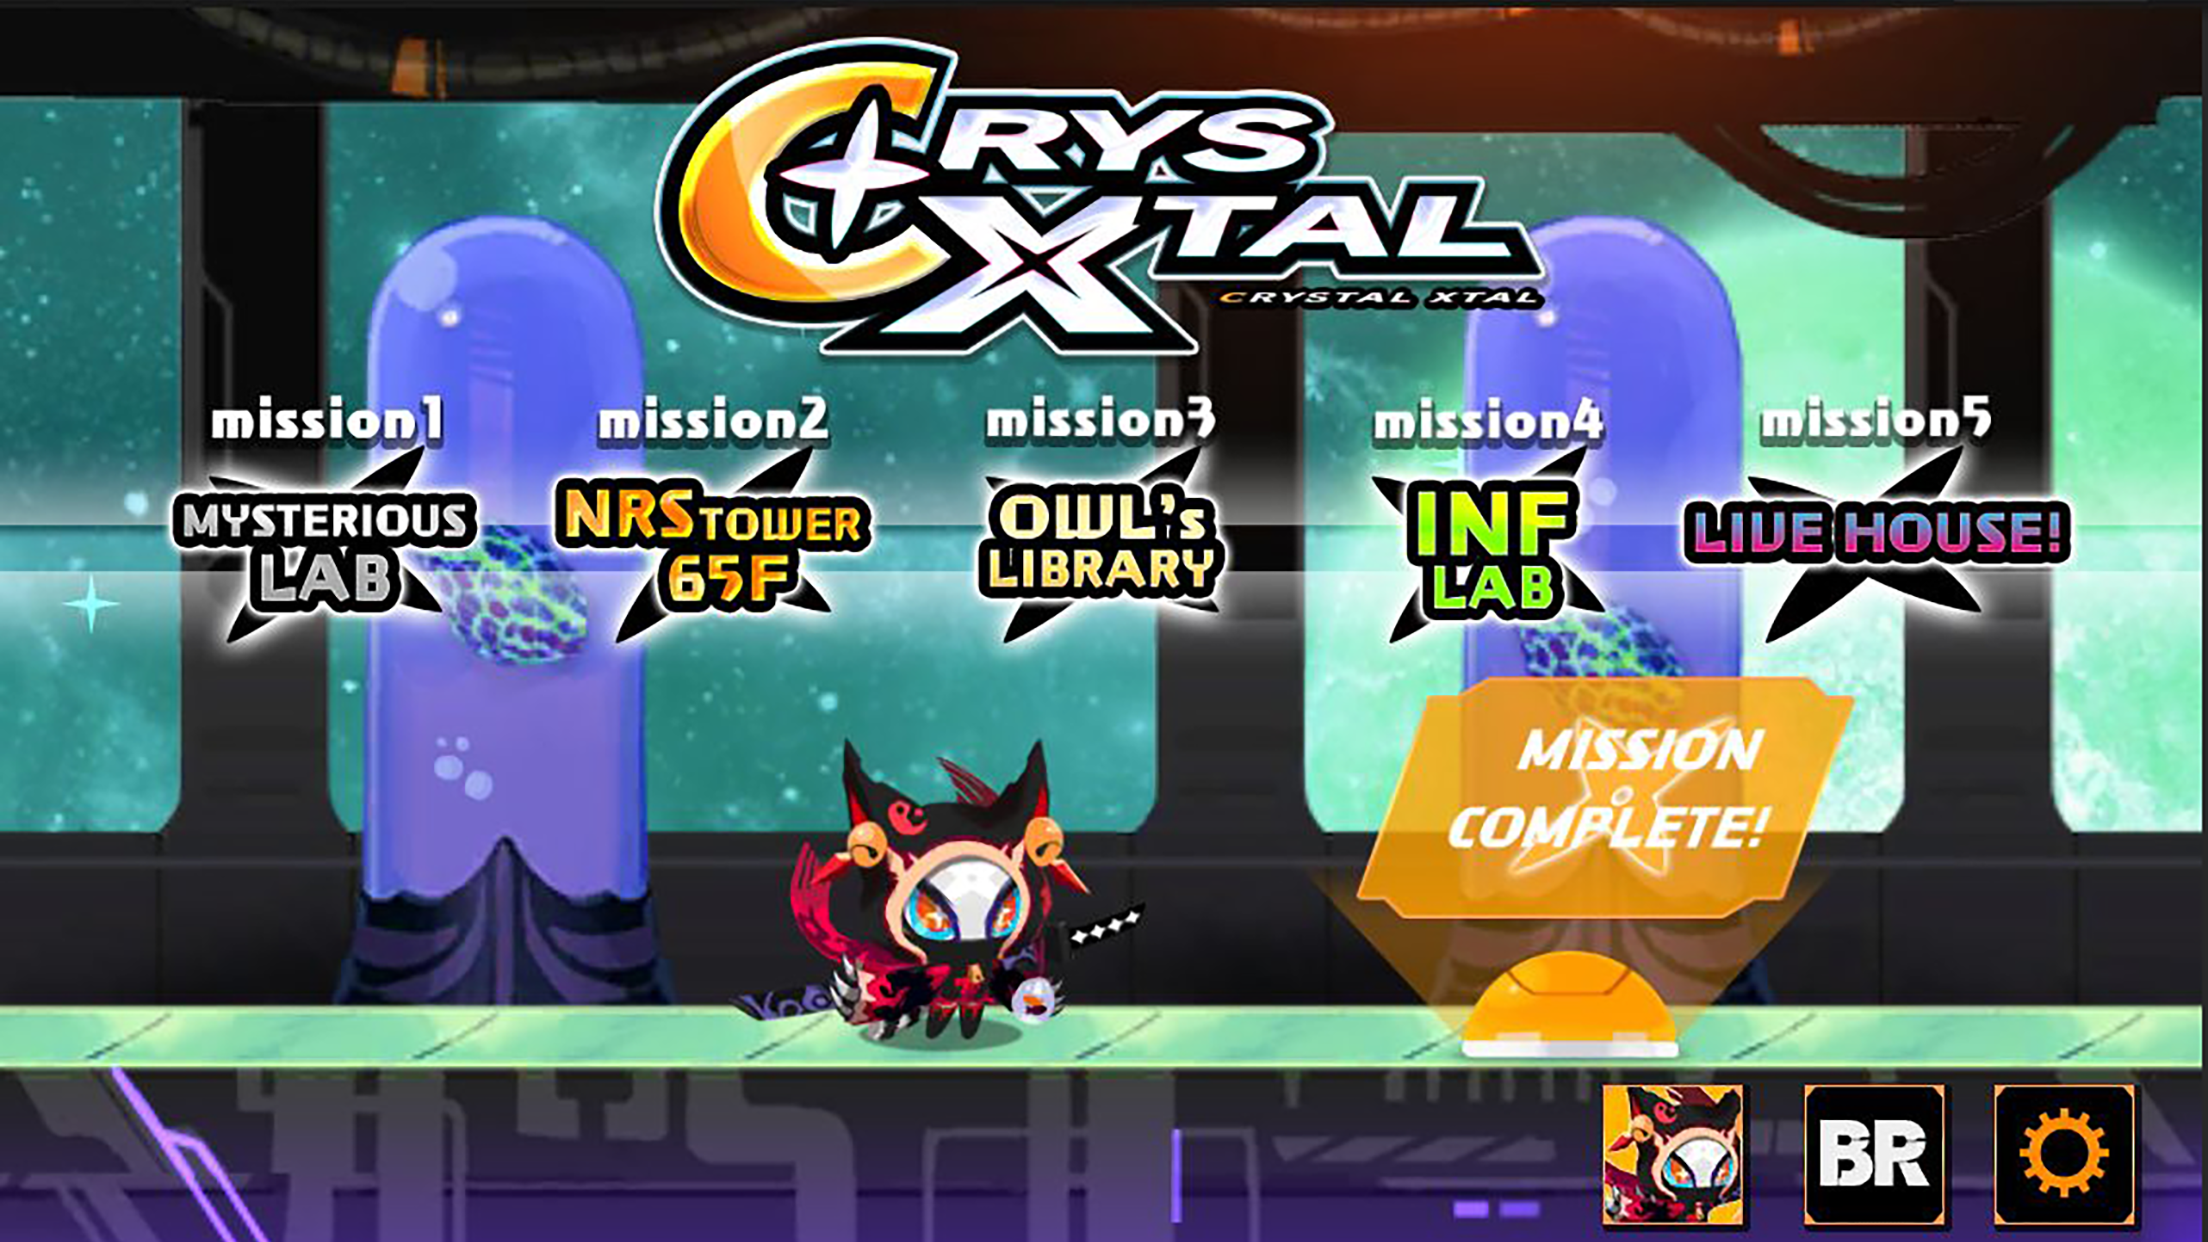 Screenshot 1 of CRYSTAL XTAL - Ninja-Katzenschießen 1.3